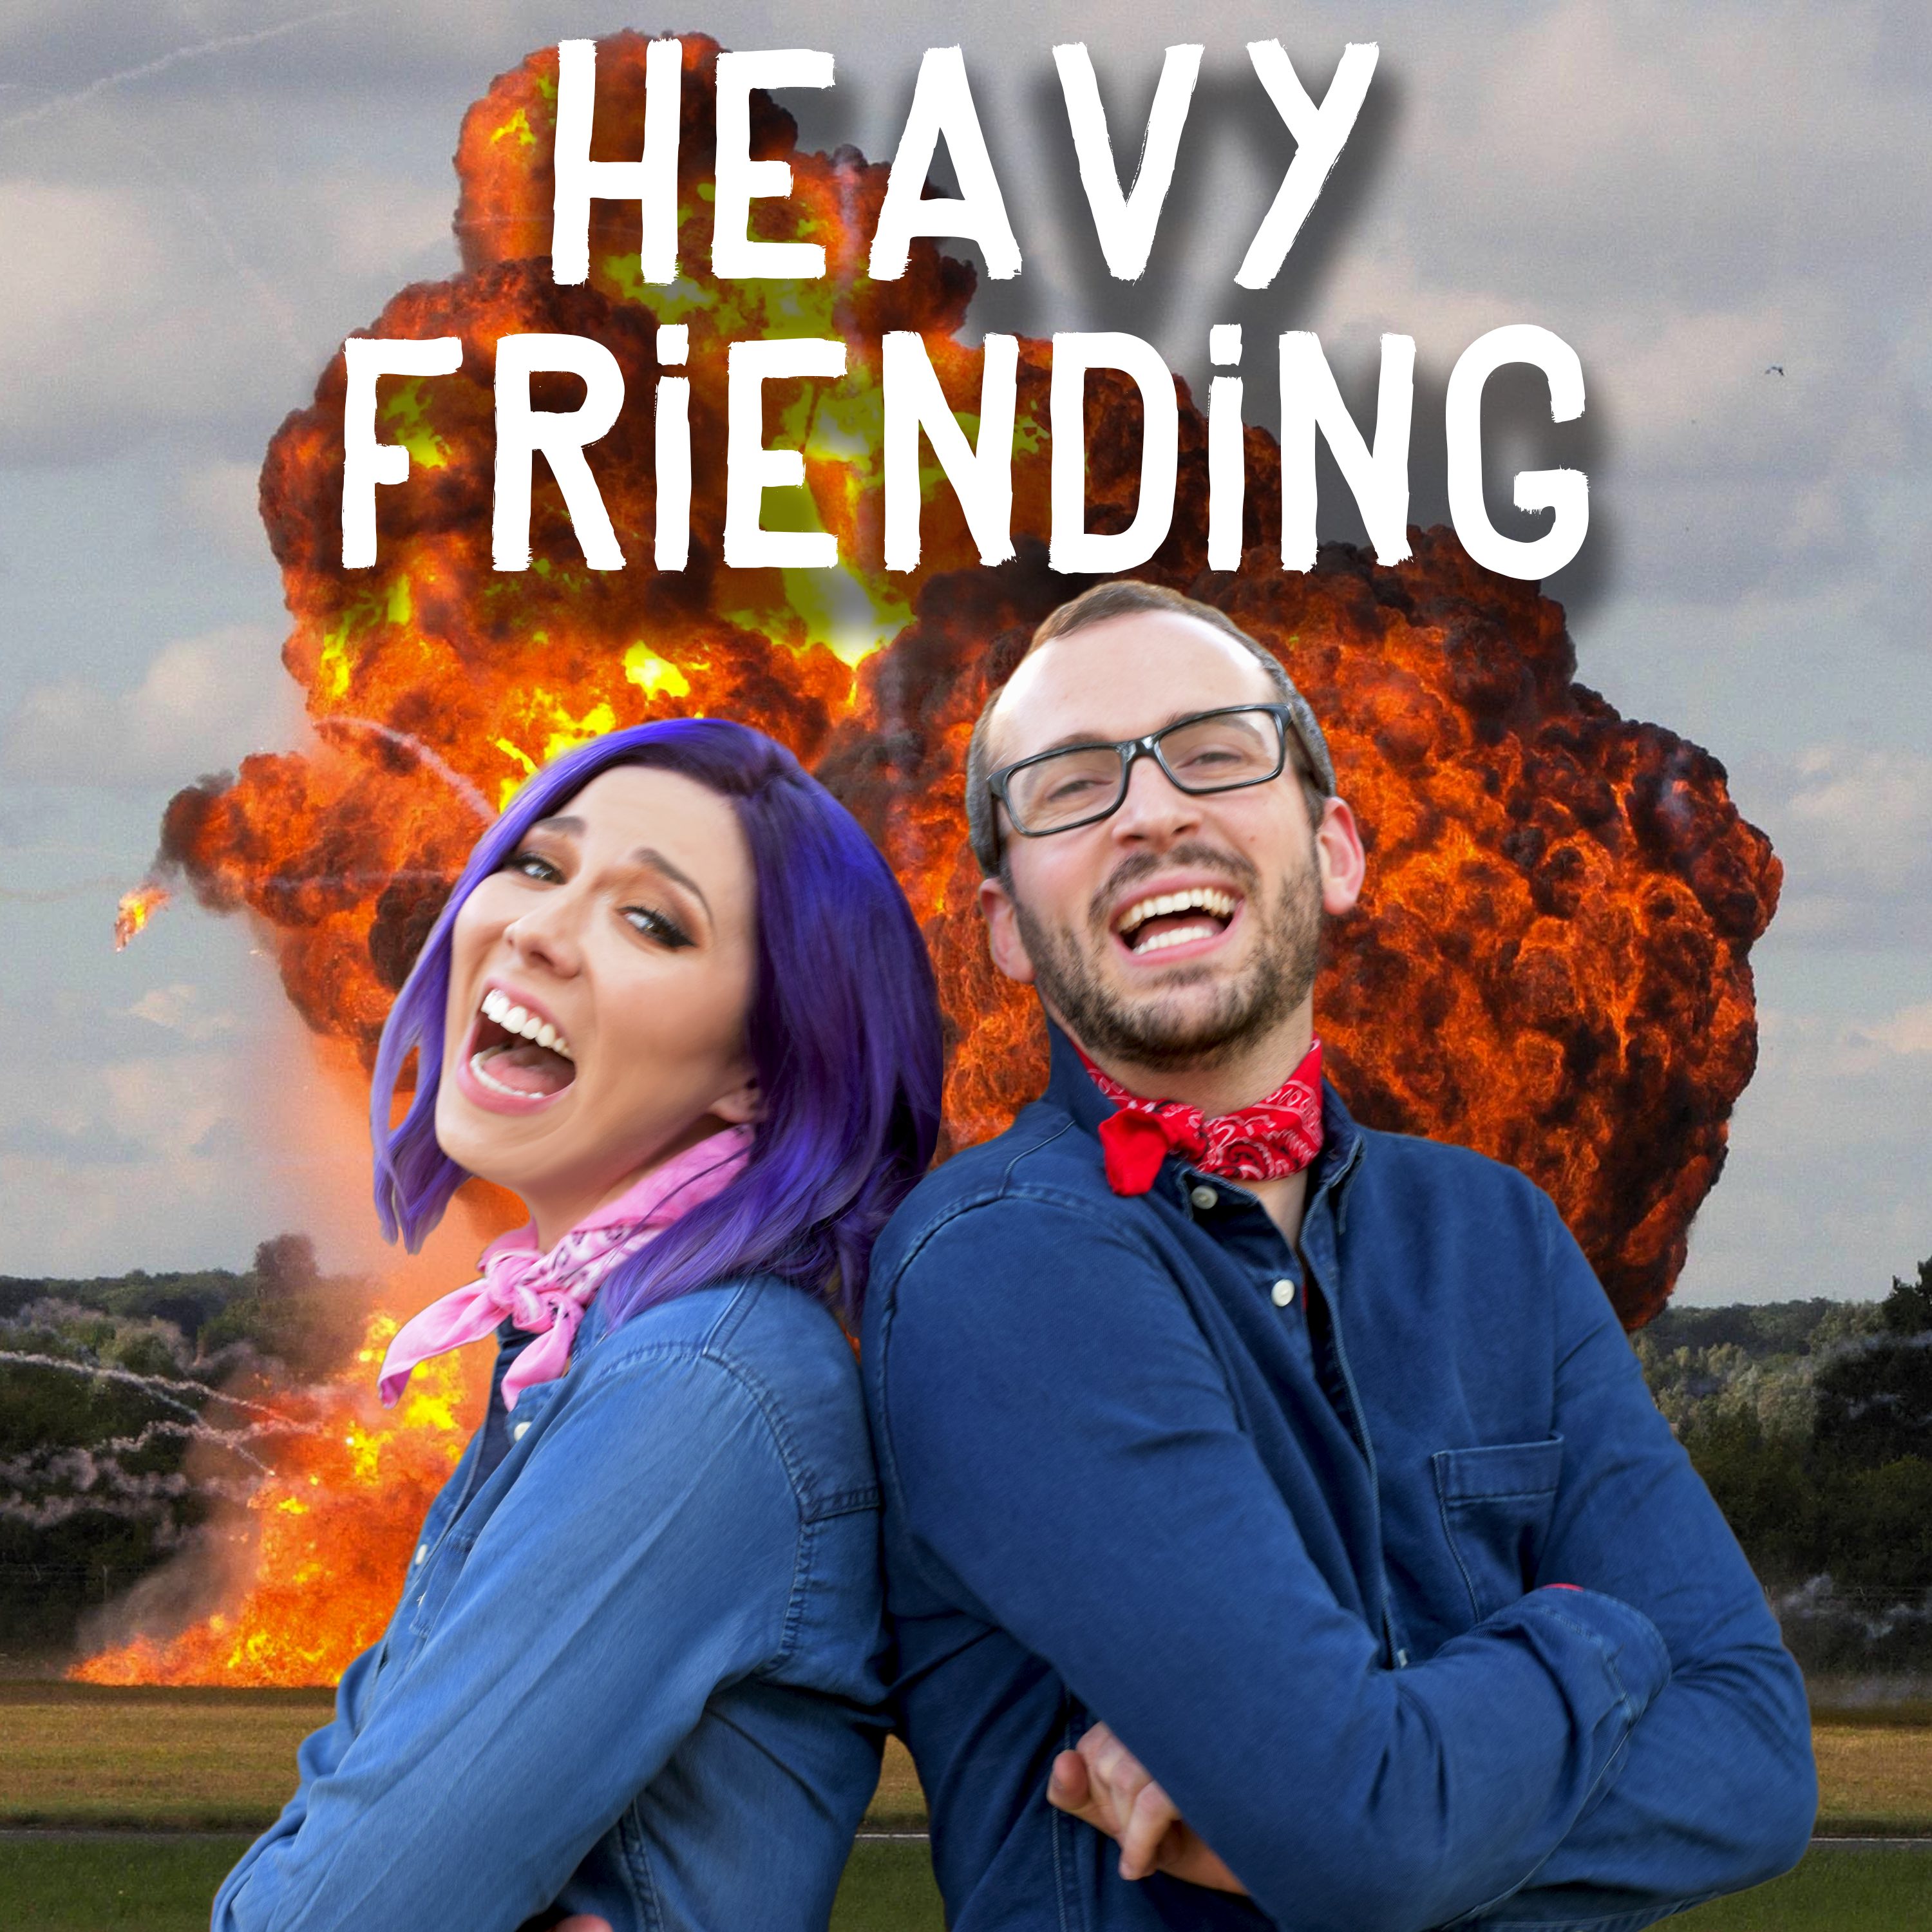 Heavy Friending: The Trailer!